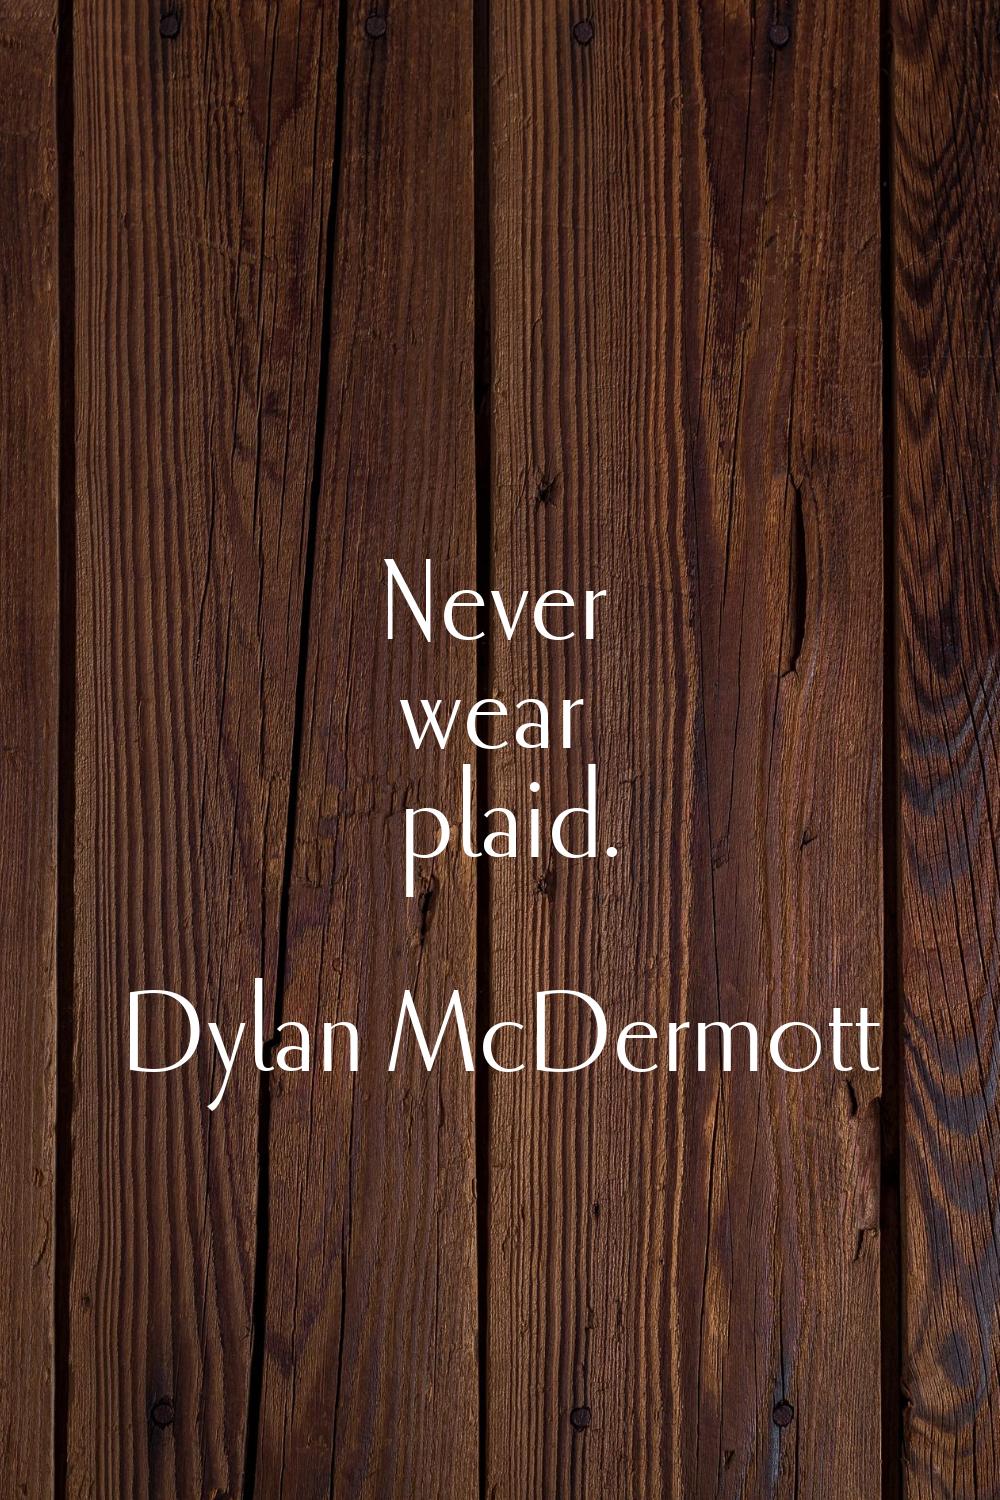 Never wear plaid.